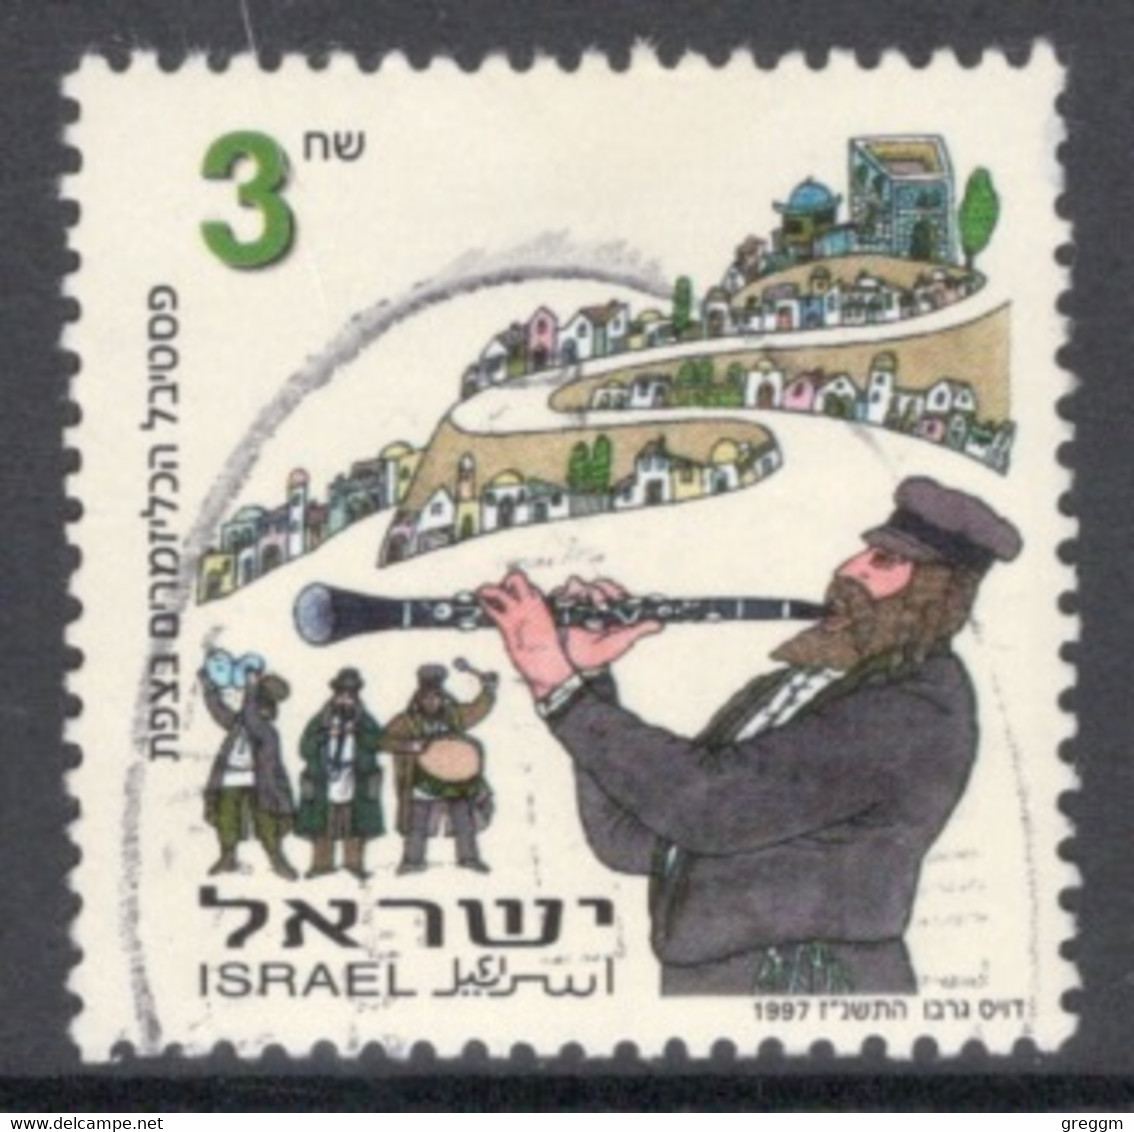 Israel 1997 Single Stamp Celebrating Music And Dance Festivals In Fine Used - Oblitérés (sans Tabs)